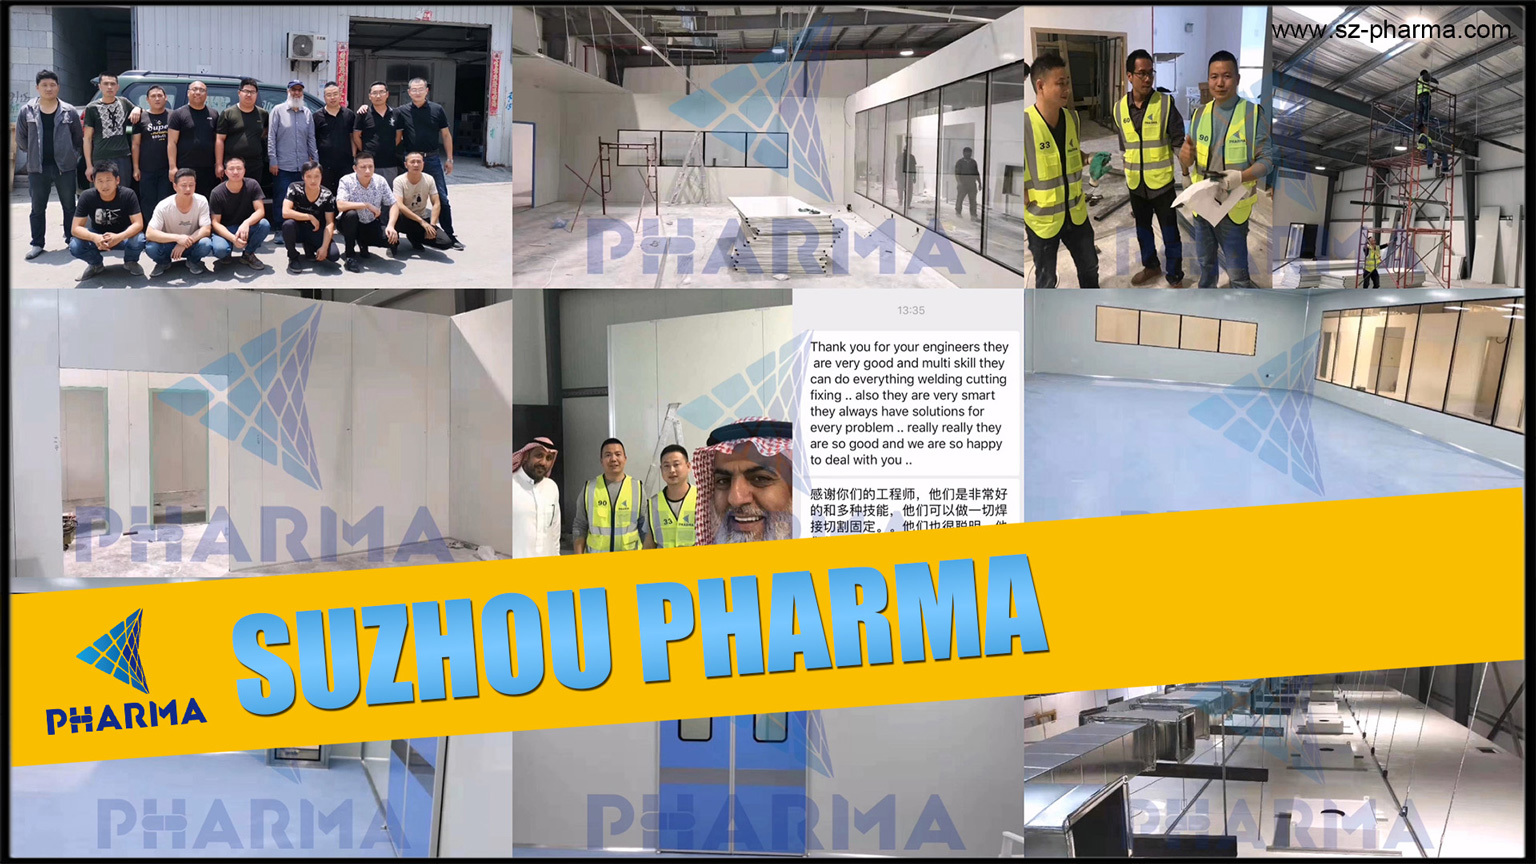 Pharmacy Industry Cleanroom in Saudi Arabia